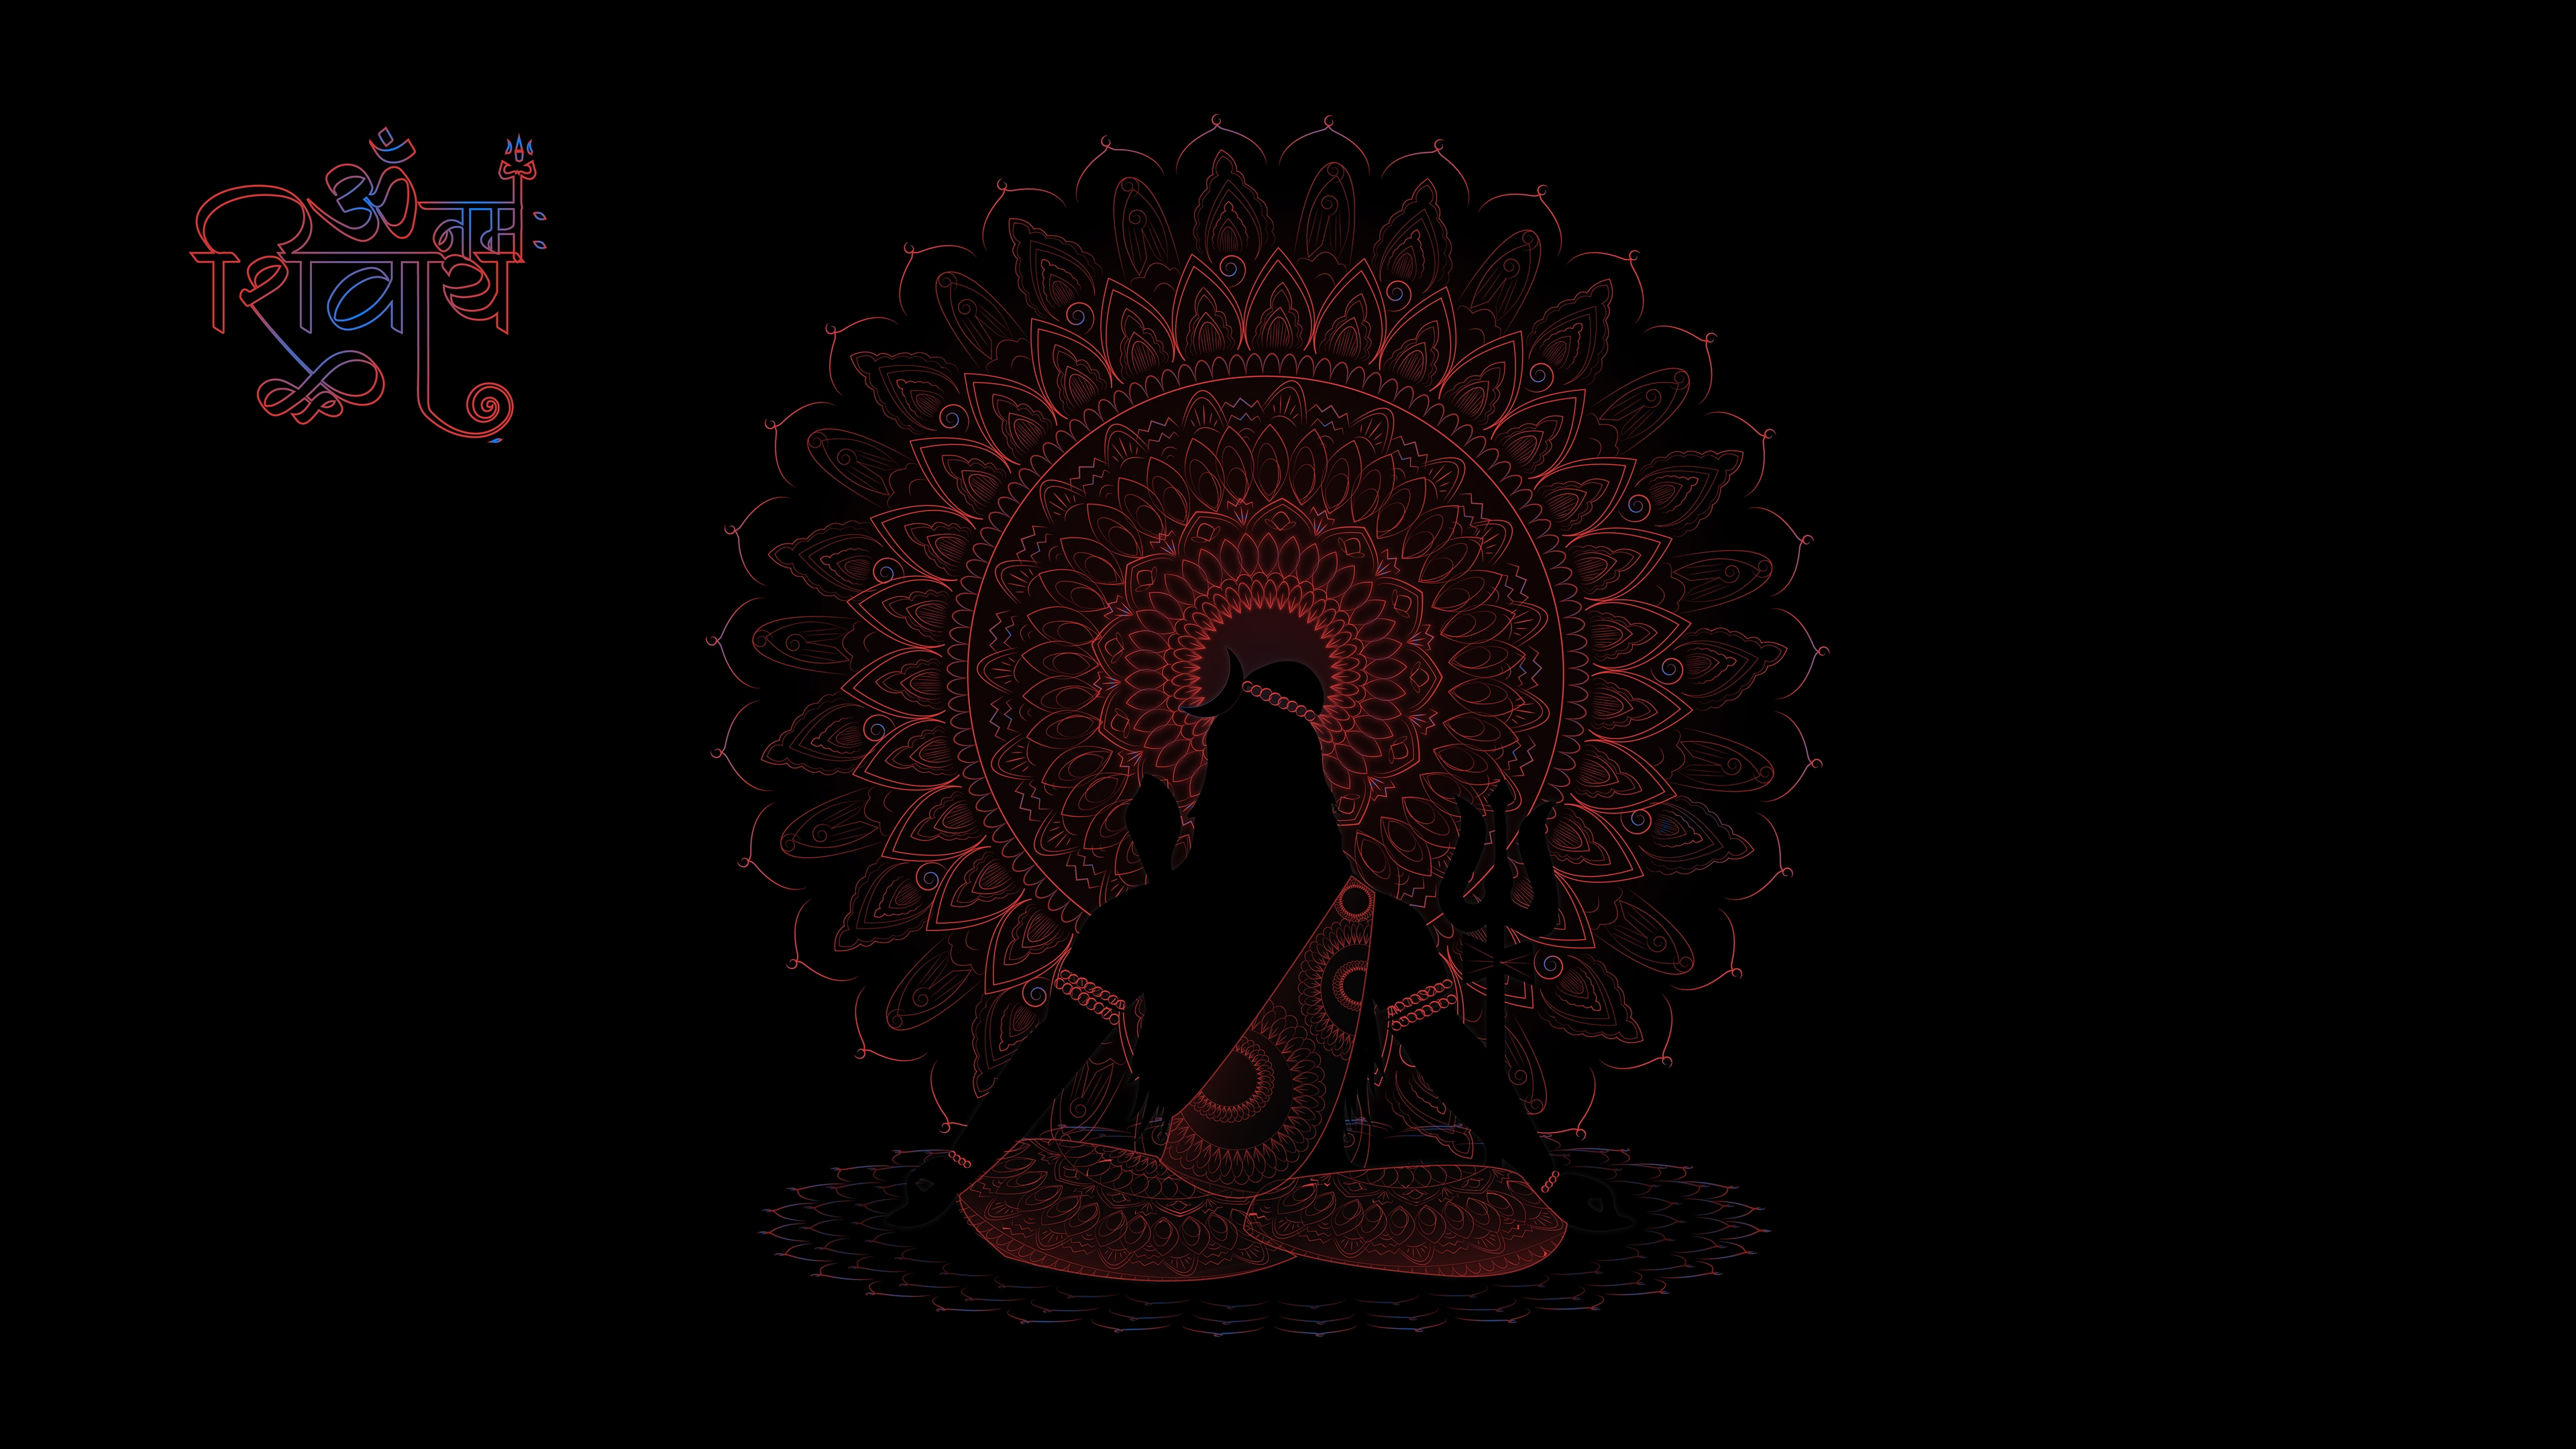 HD wallpaper, Illustration, Amoled, Black Background, Lord Shiva